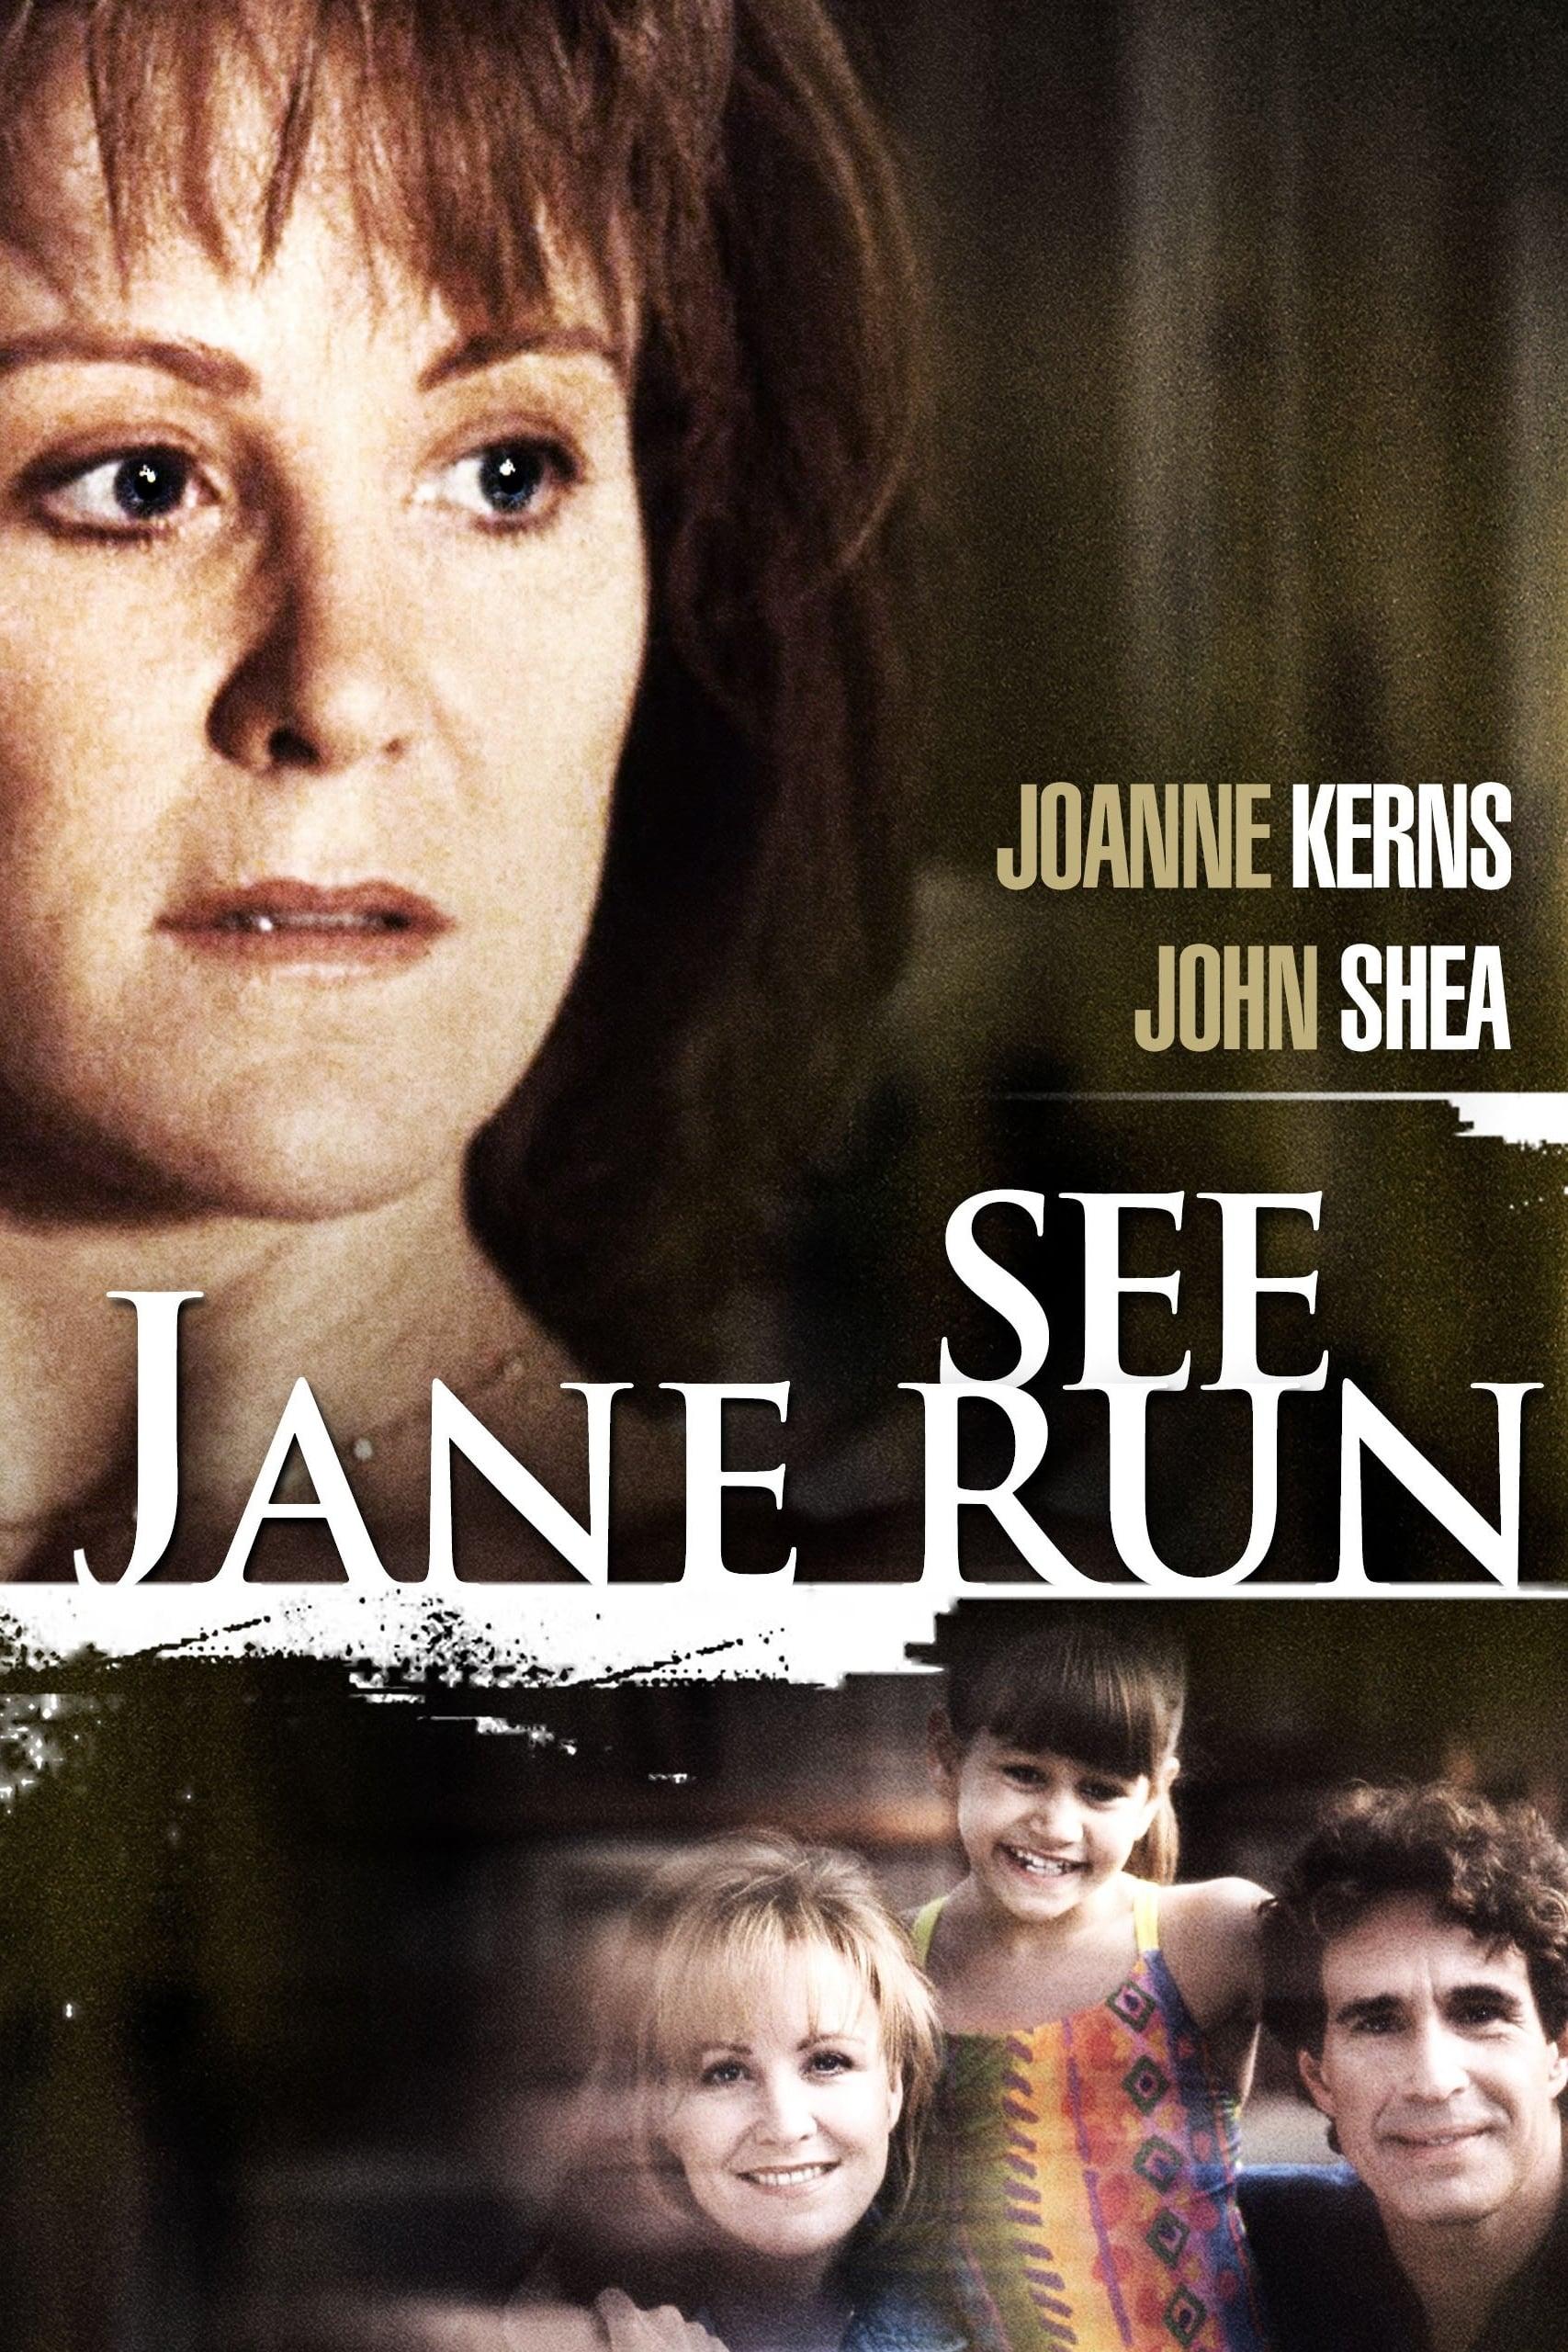 See Jane Run poster